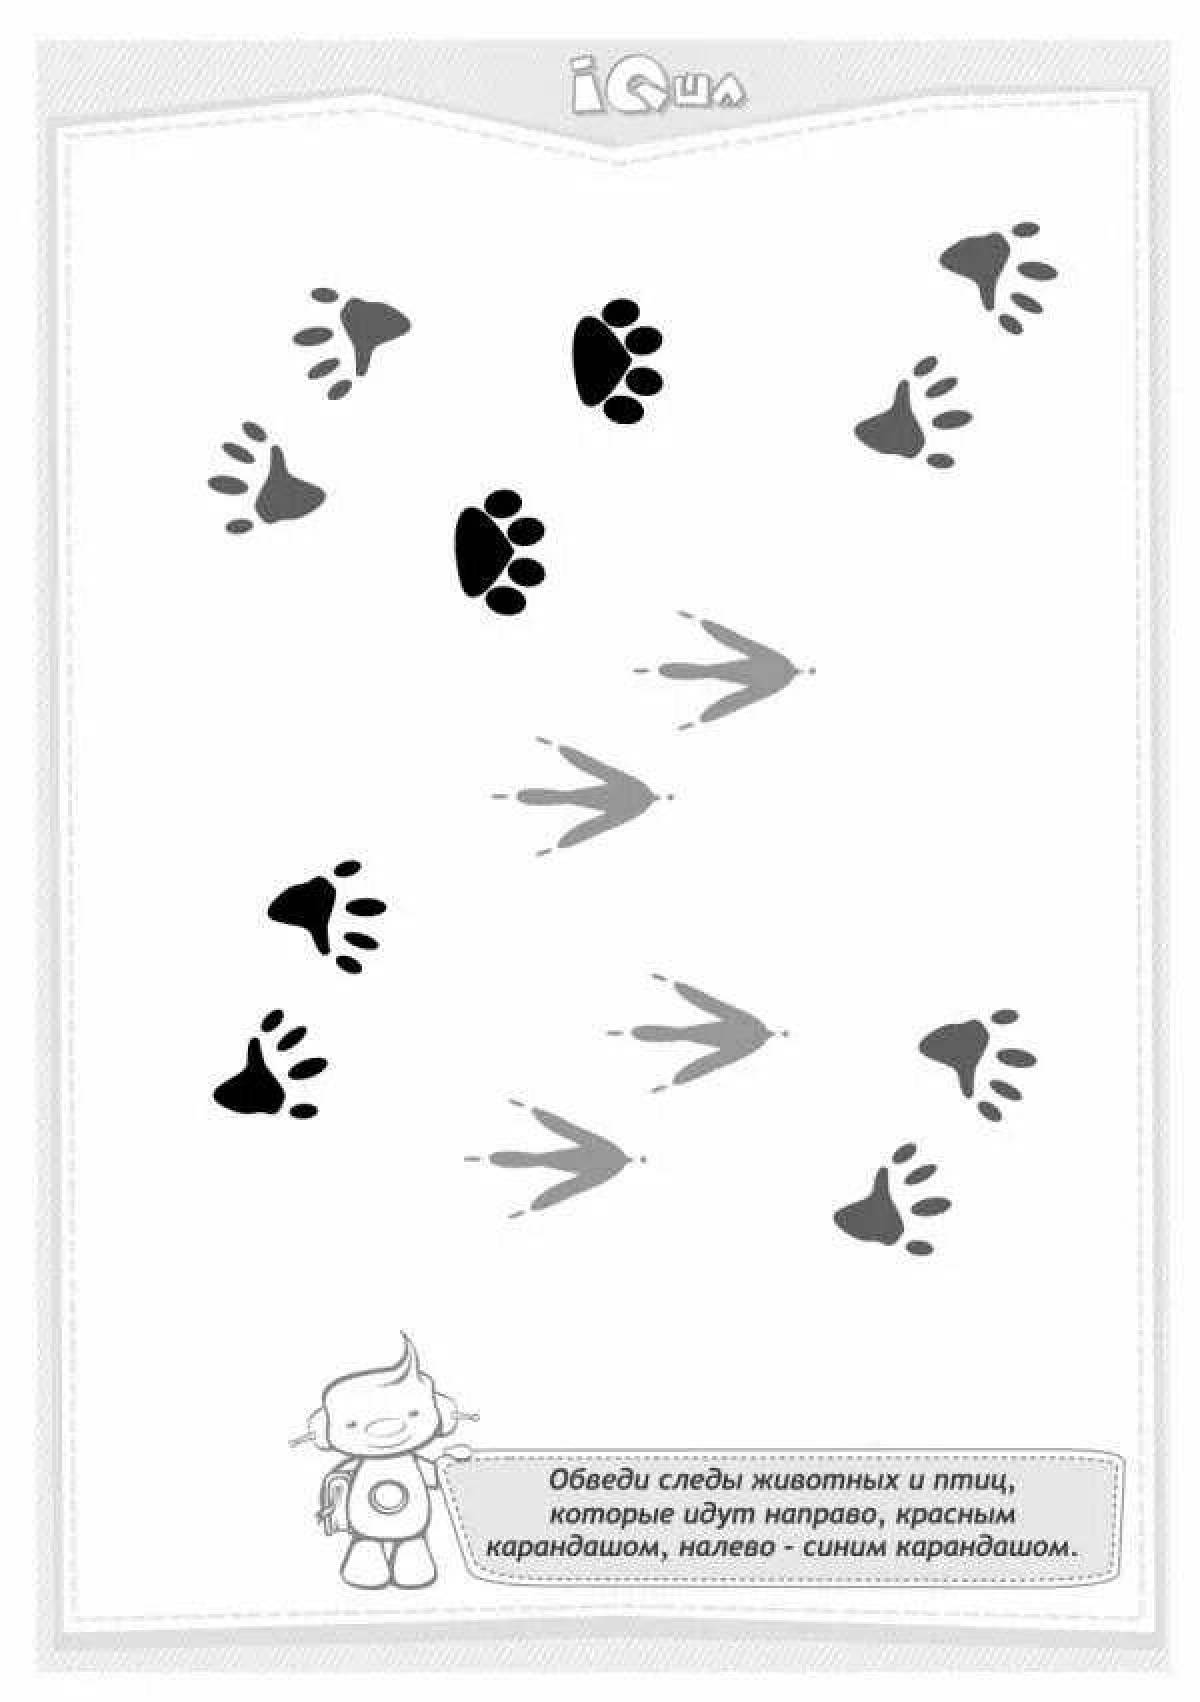 Playful animal footprint coloring page